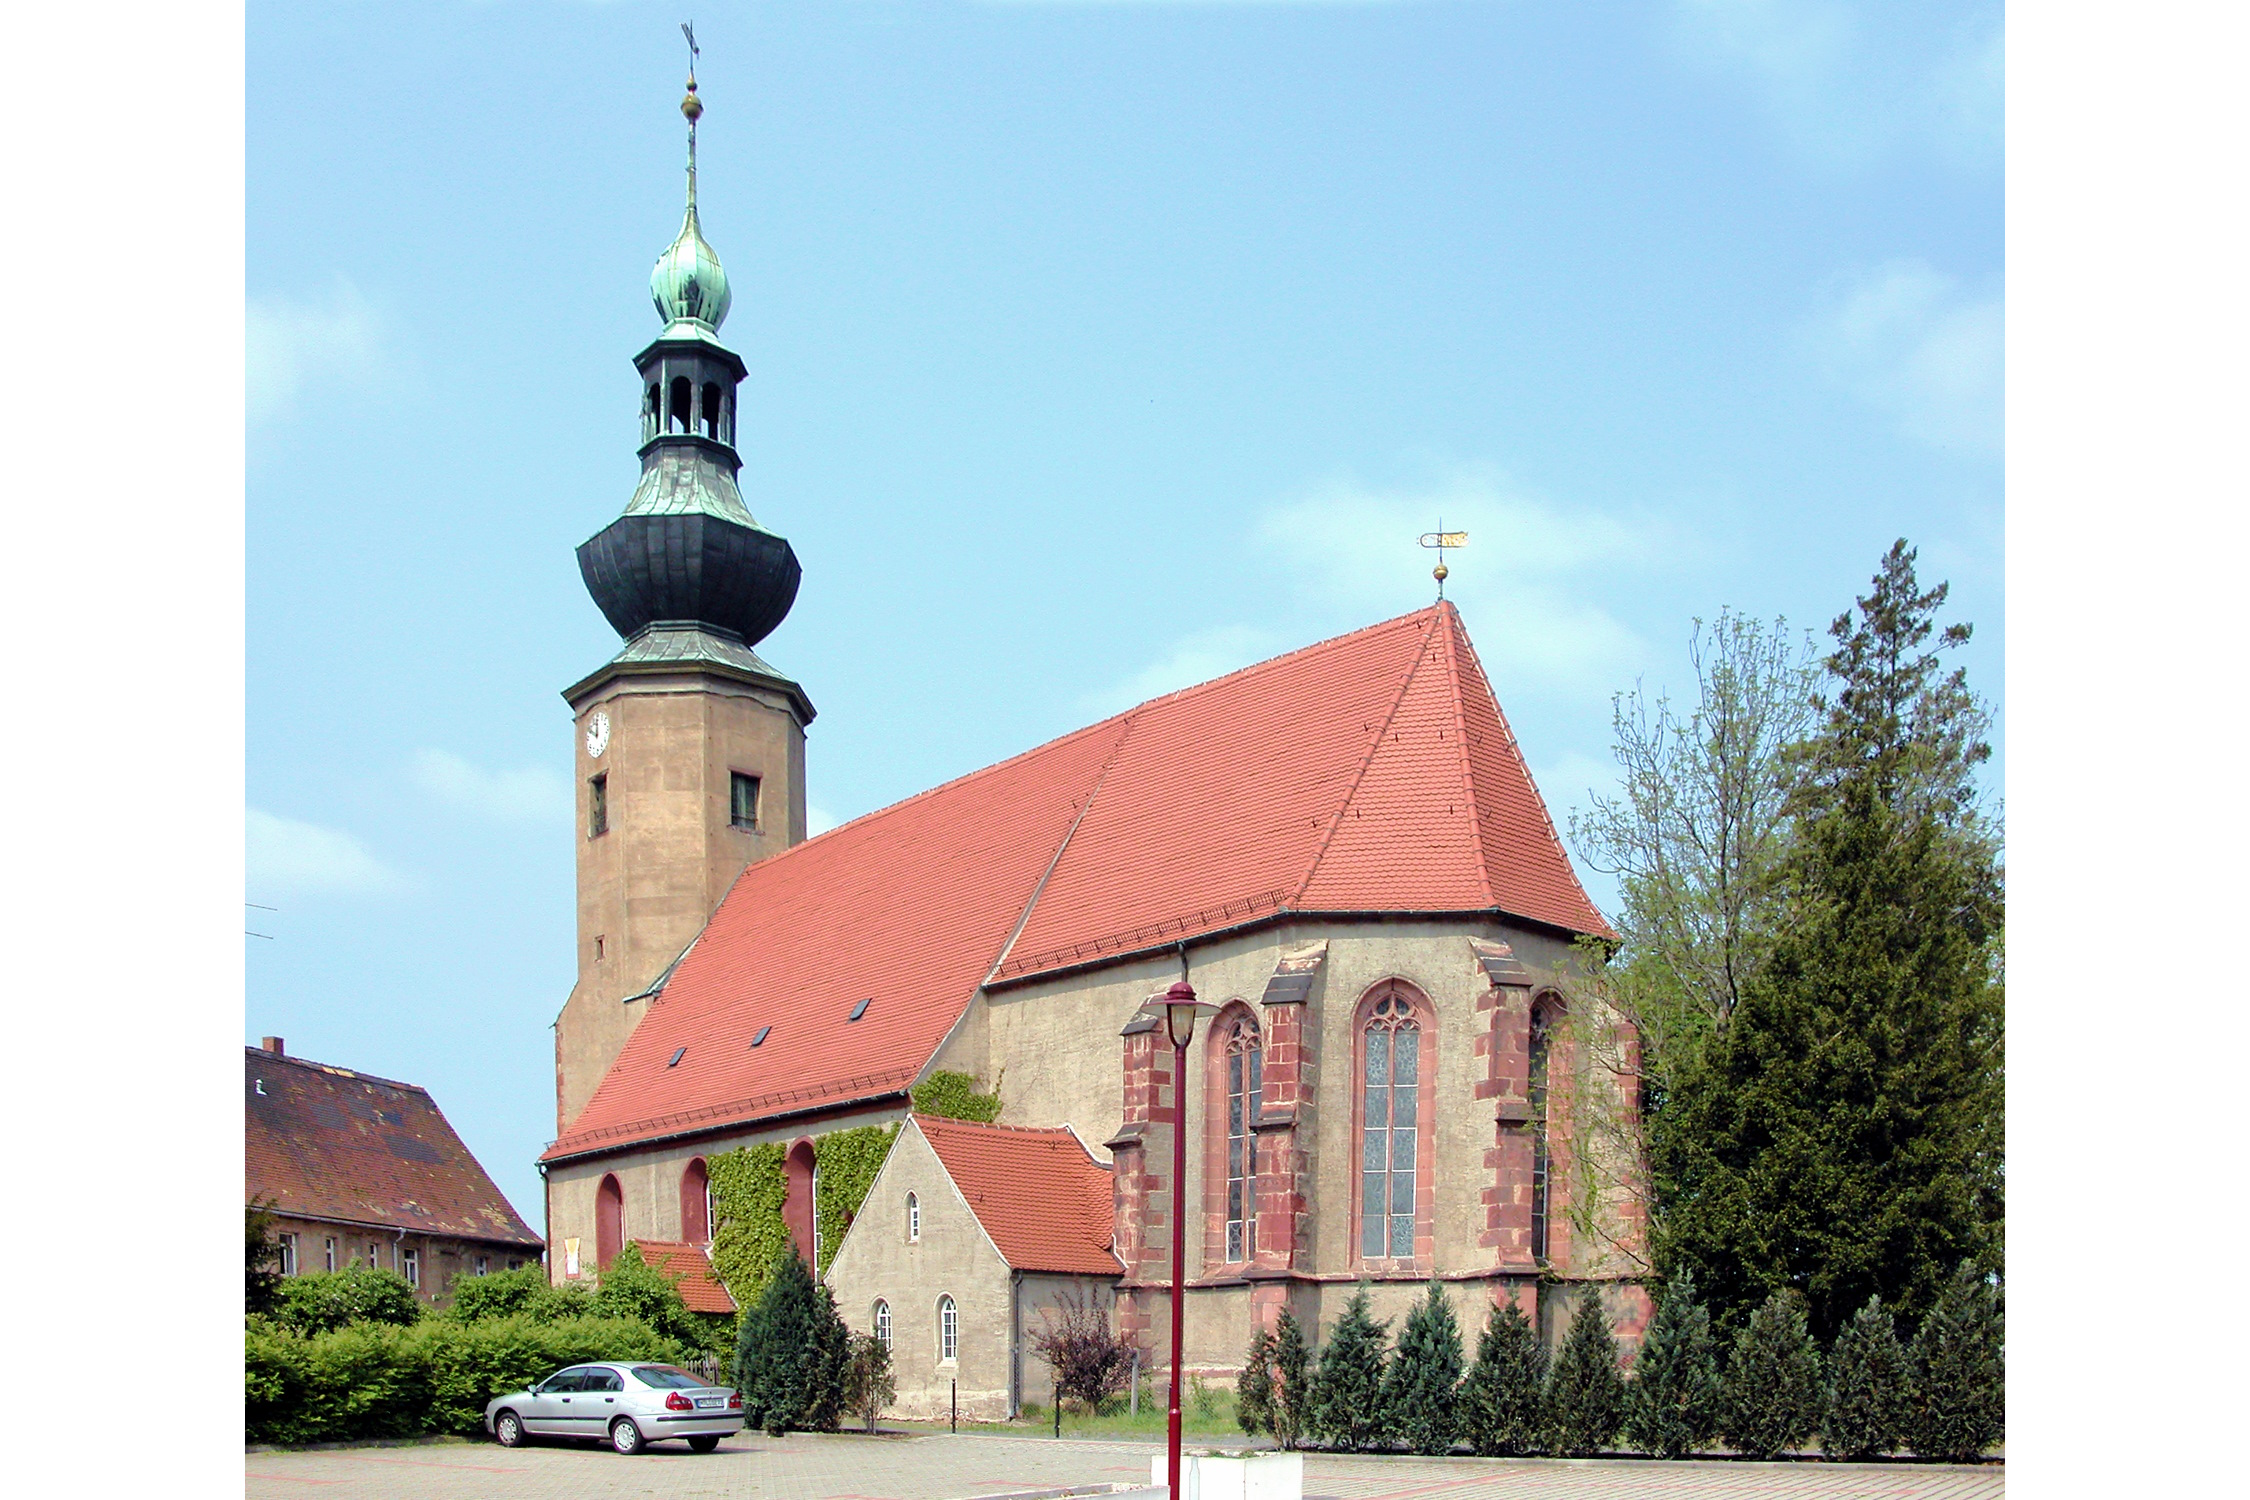 Die Stadtkirche Trebsen. Foto: Jörg Blobelt, CC BY-SA 4.0, https://commons.wikimedia.org/w/index.php?curid=74526511 